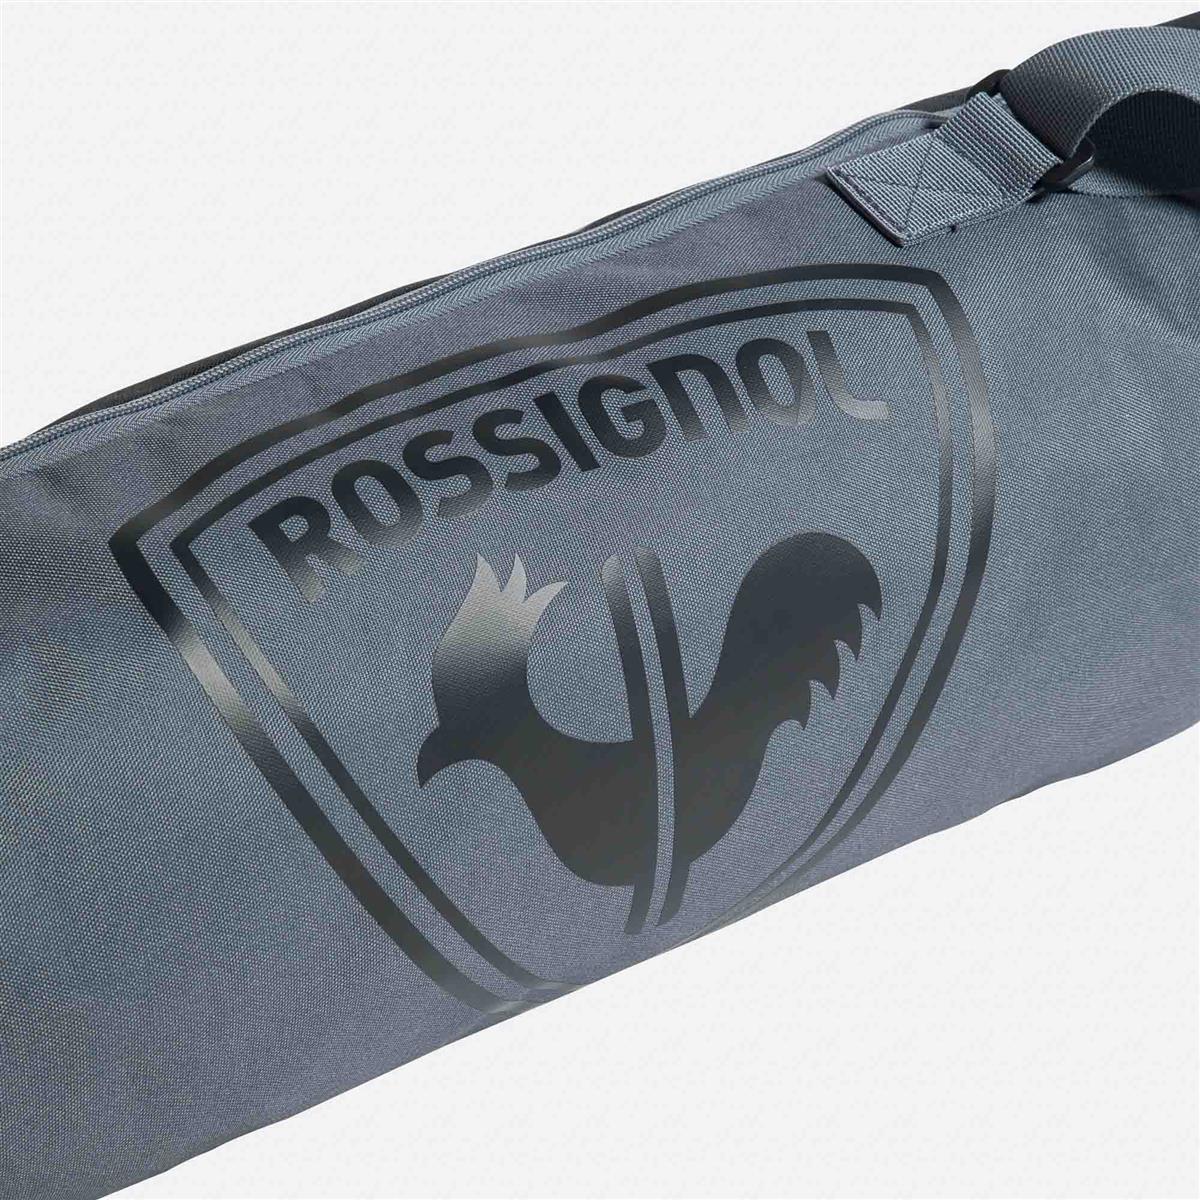 Rossignol Tactic Ski Bag EX LG 160-210